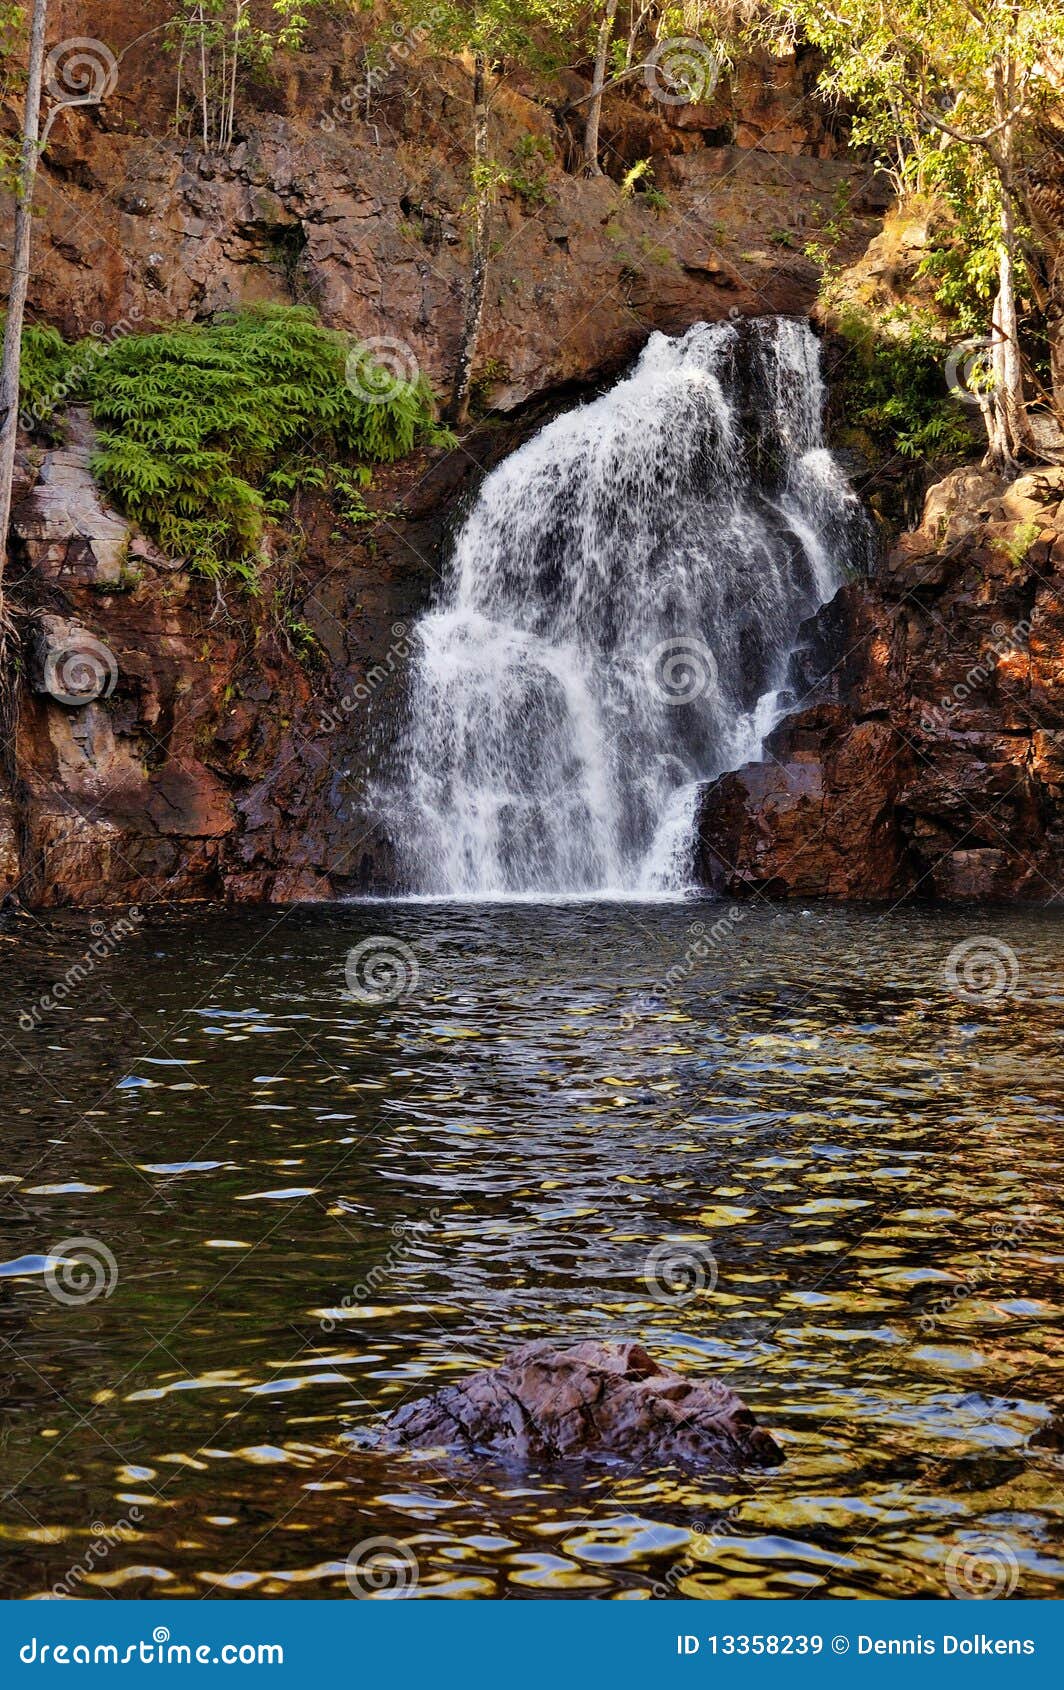 waterfall in litchfield, australia